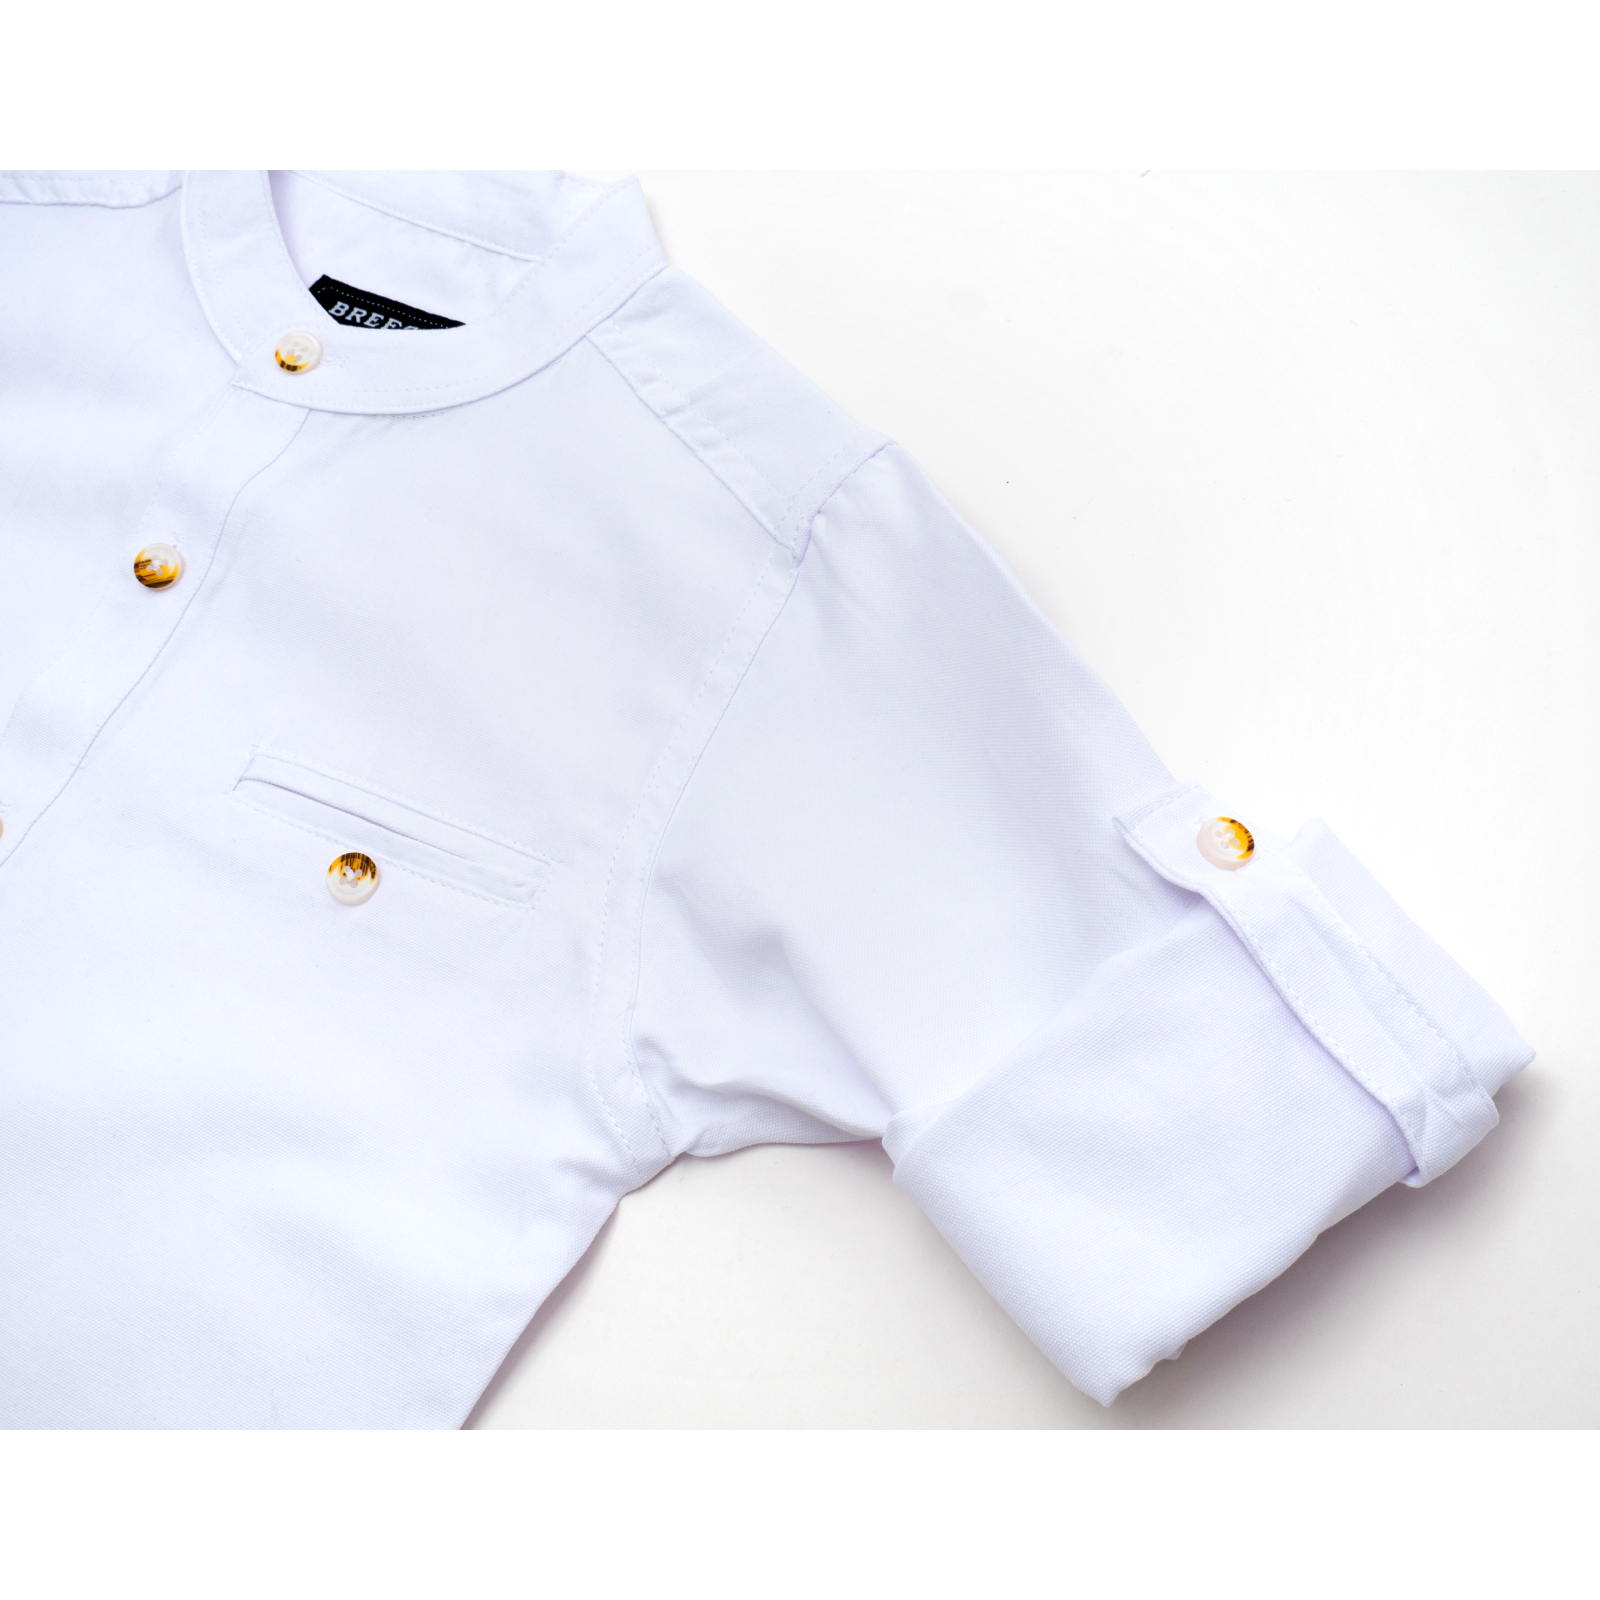 Рубашка Breeze для школы (G-457-140B-white) изображение 3